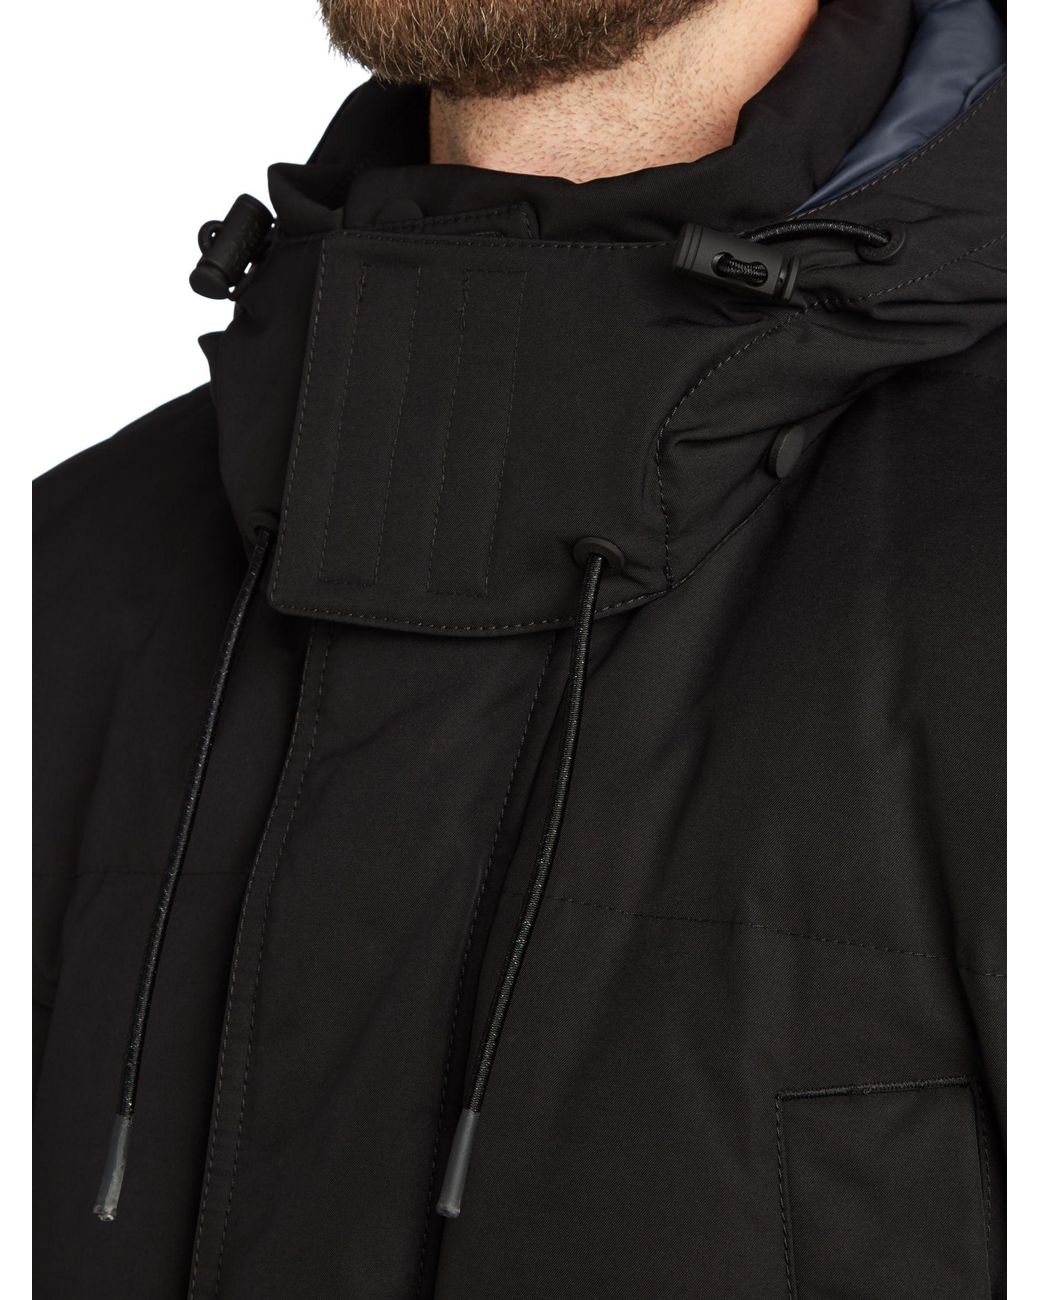 BOSS by HUGO BOSS Boss Onek Hooded Parka Jacket in Black for Men | Lyst UK